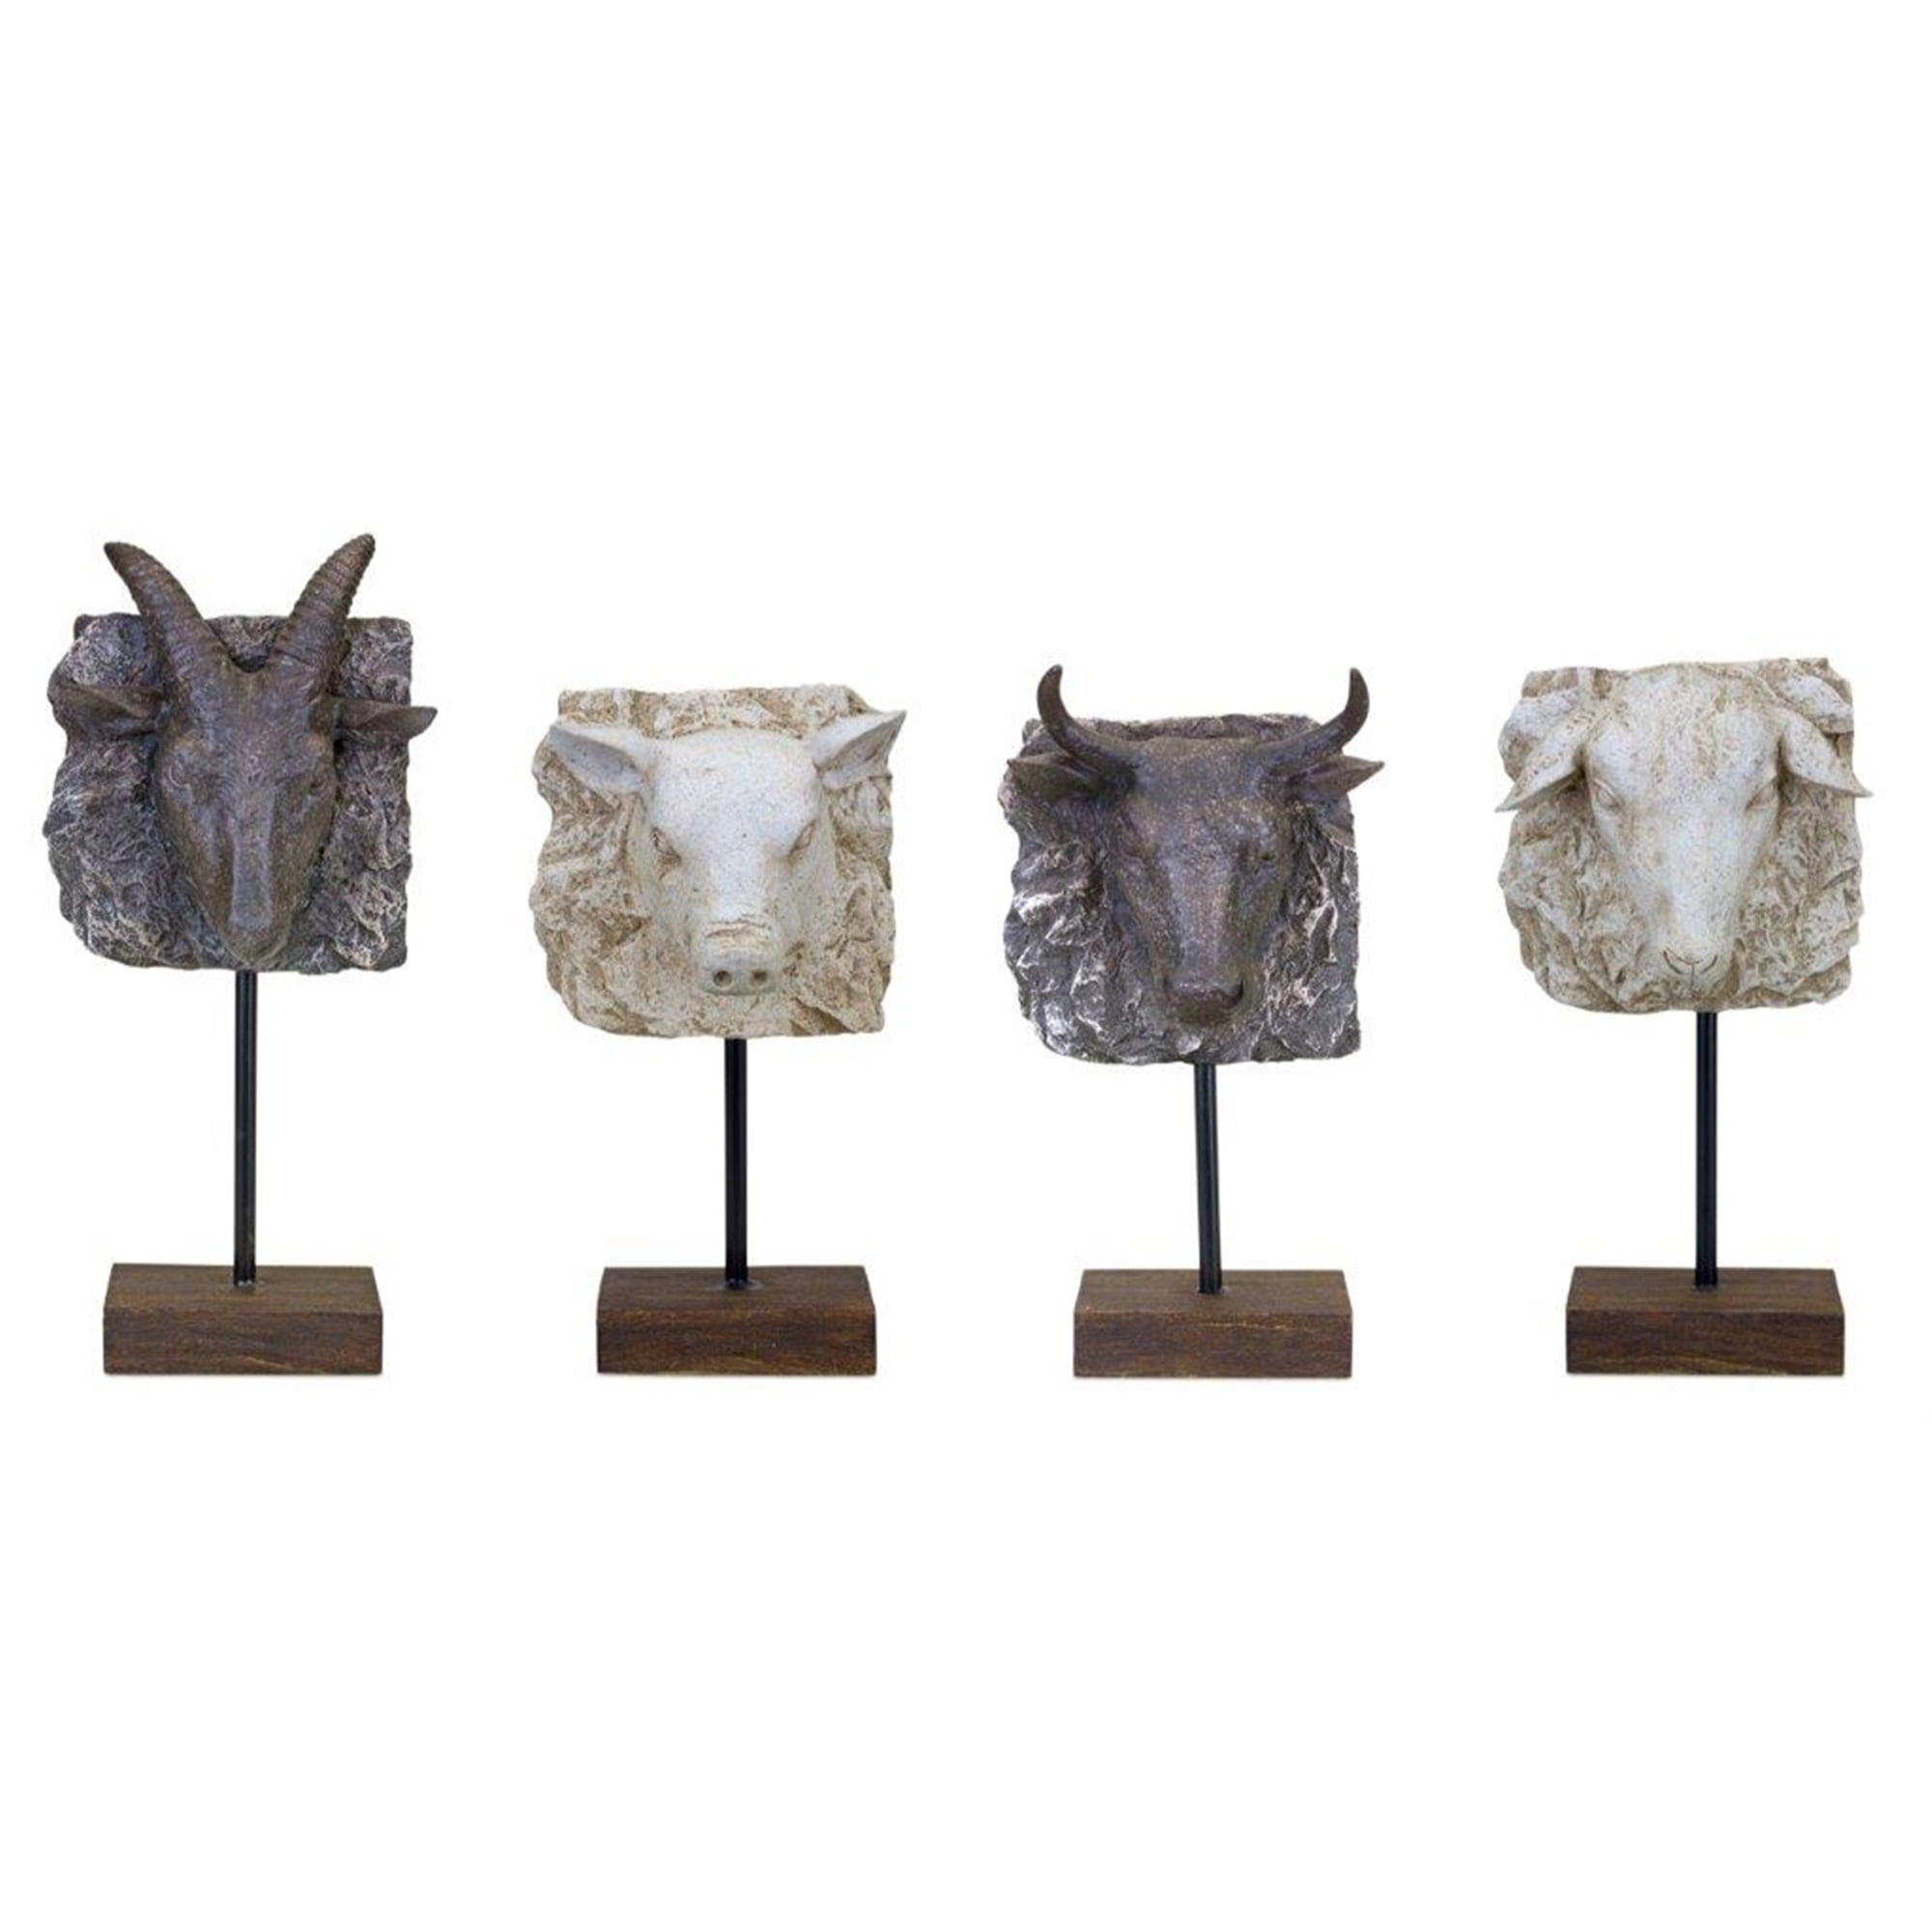 Animal Sculpture (Set of 4) 12"H, 12"H, 12"H, 14"H Resin